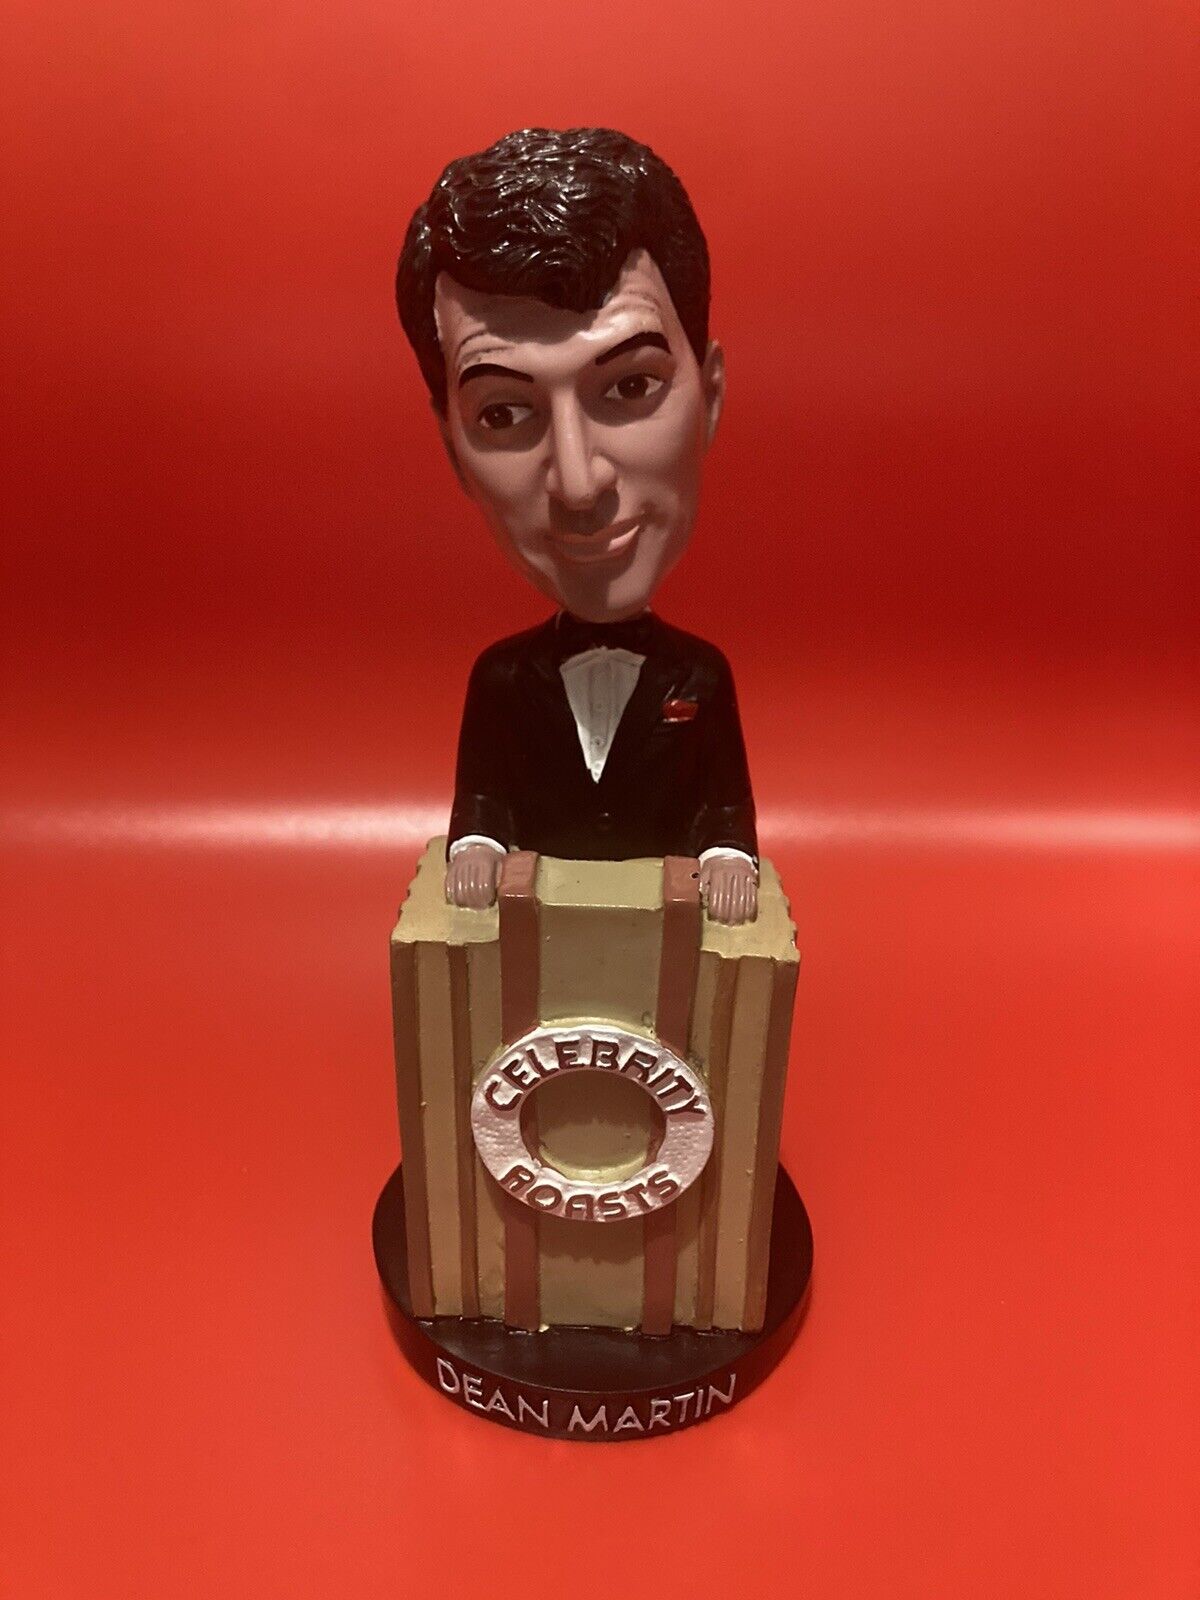 Dean Martin Celebrity Roast Collectible Figurine RARE